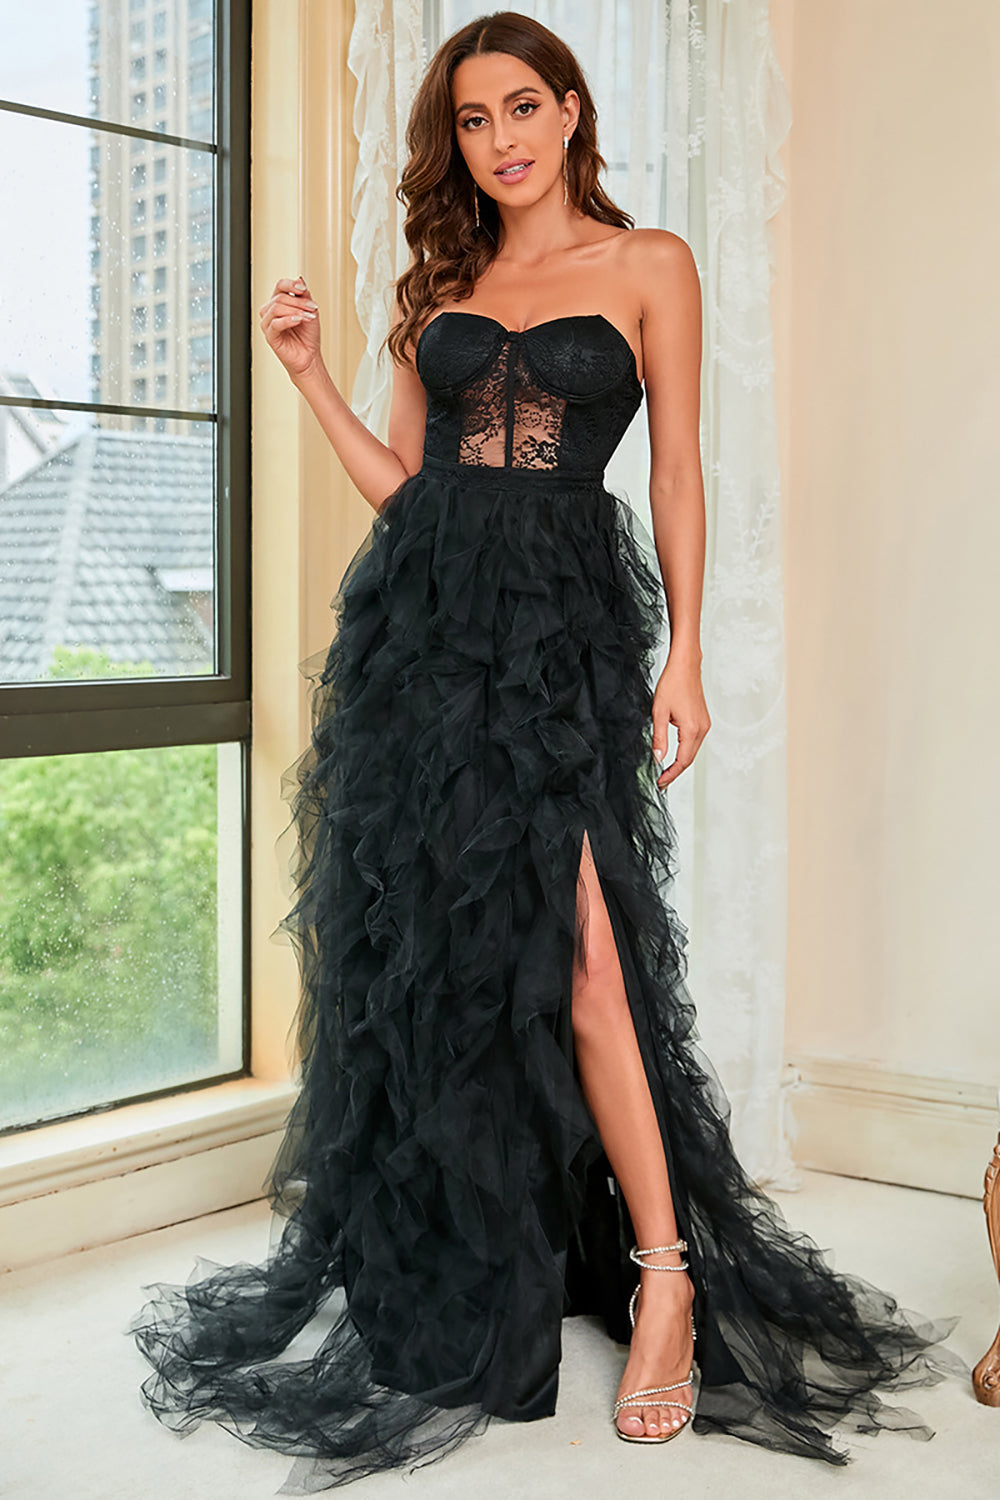 Strapless Black Corset Formal Dress with Slit